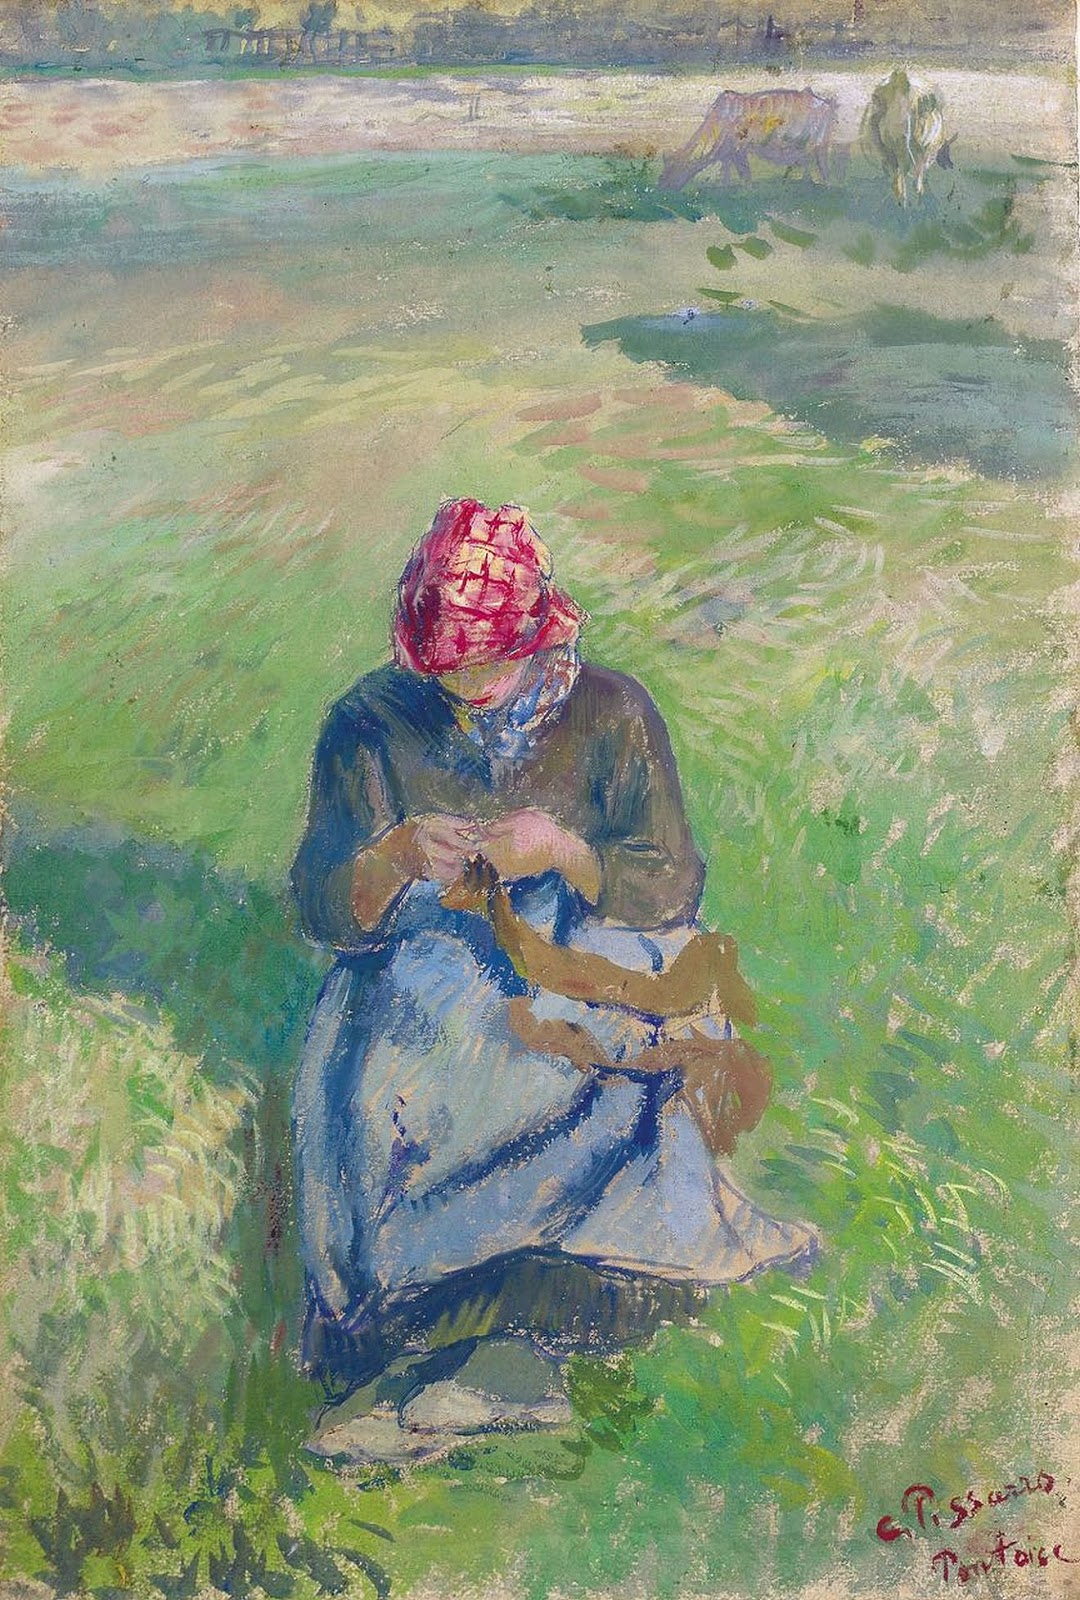 Camille+Pissarro-1830-1903 (337).jpg